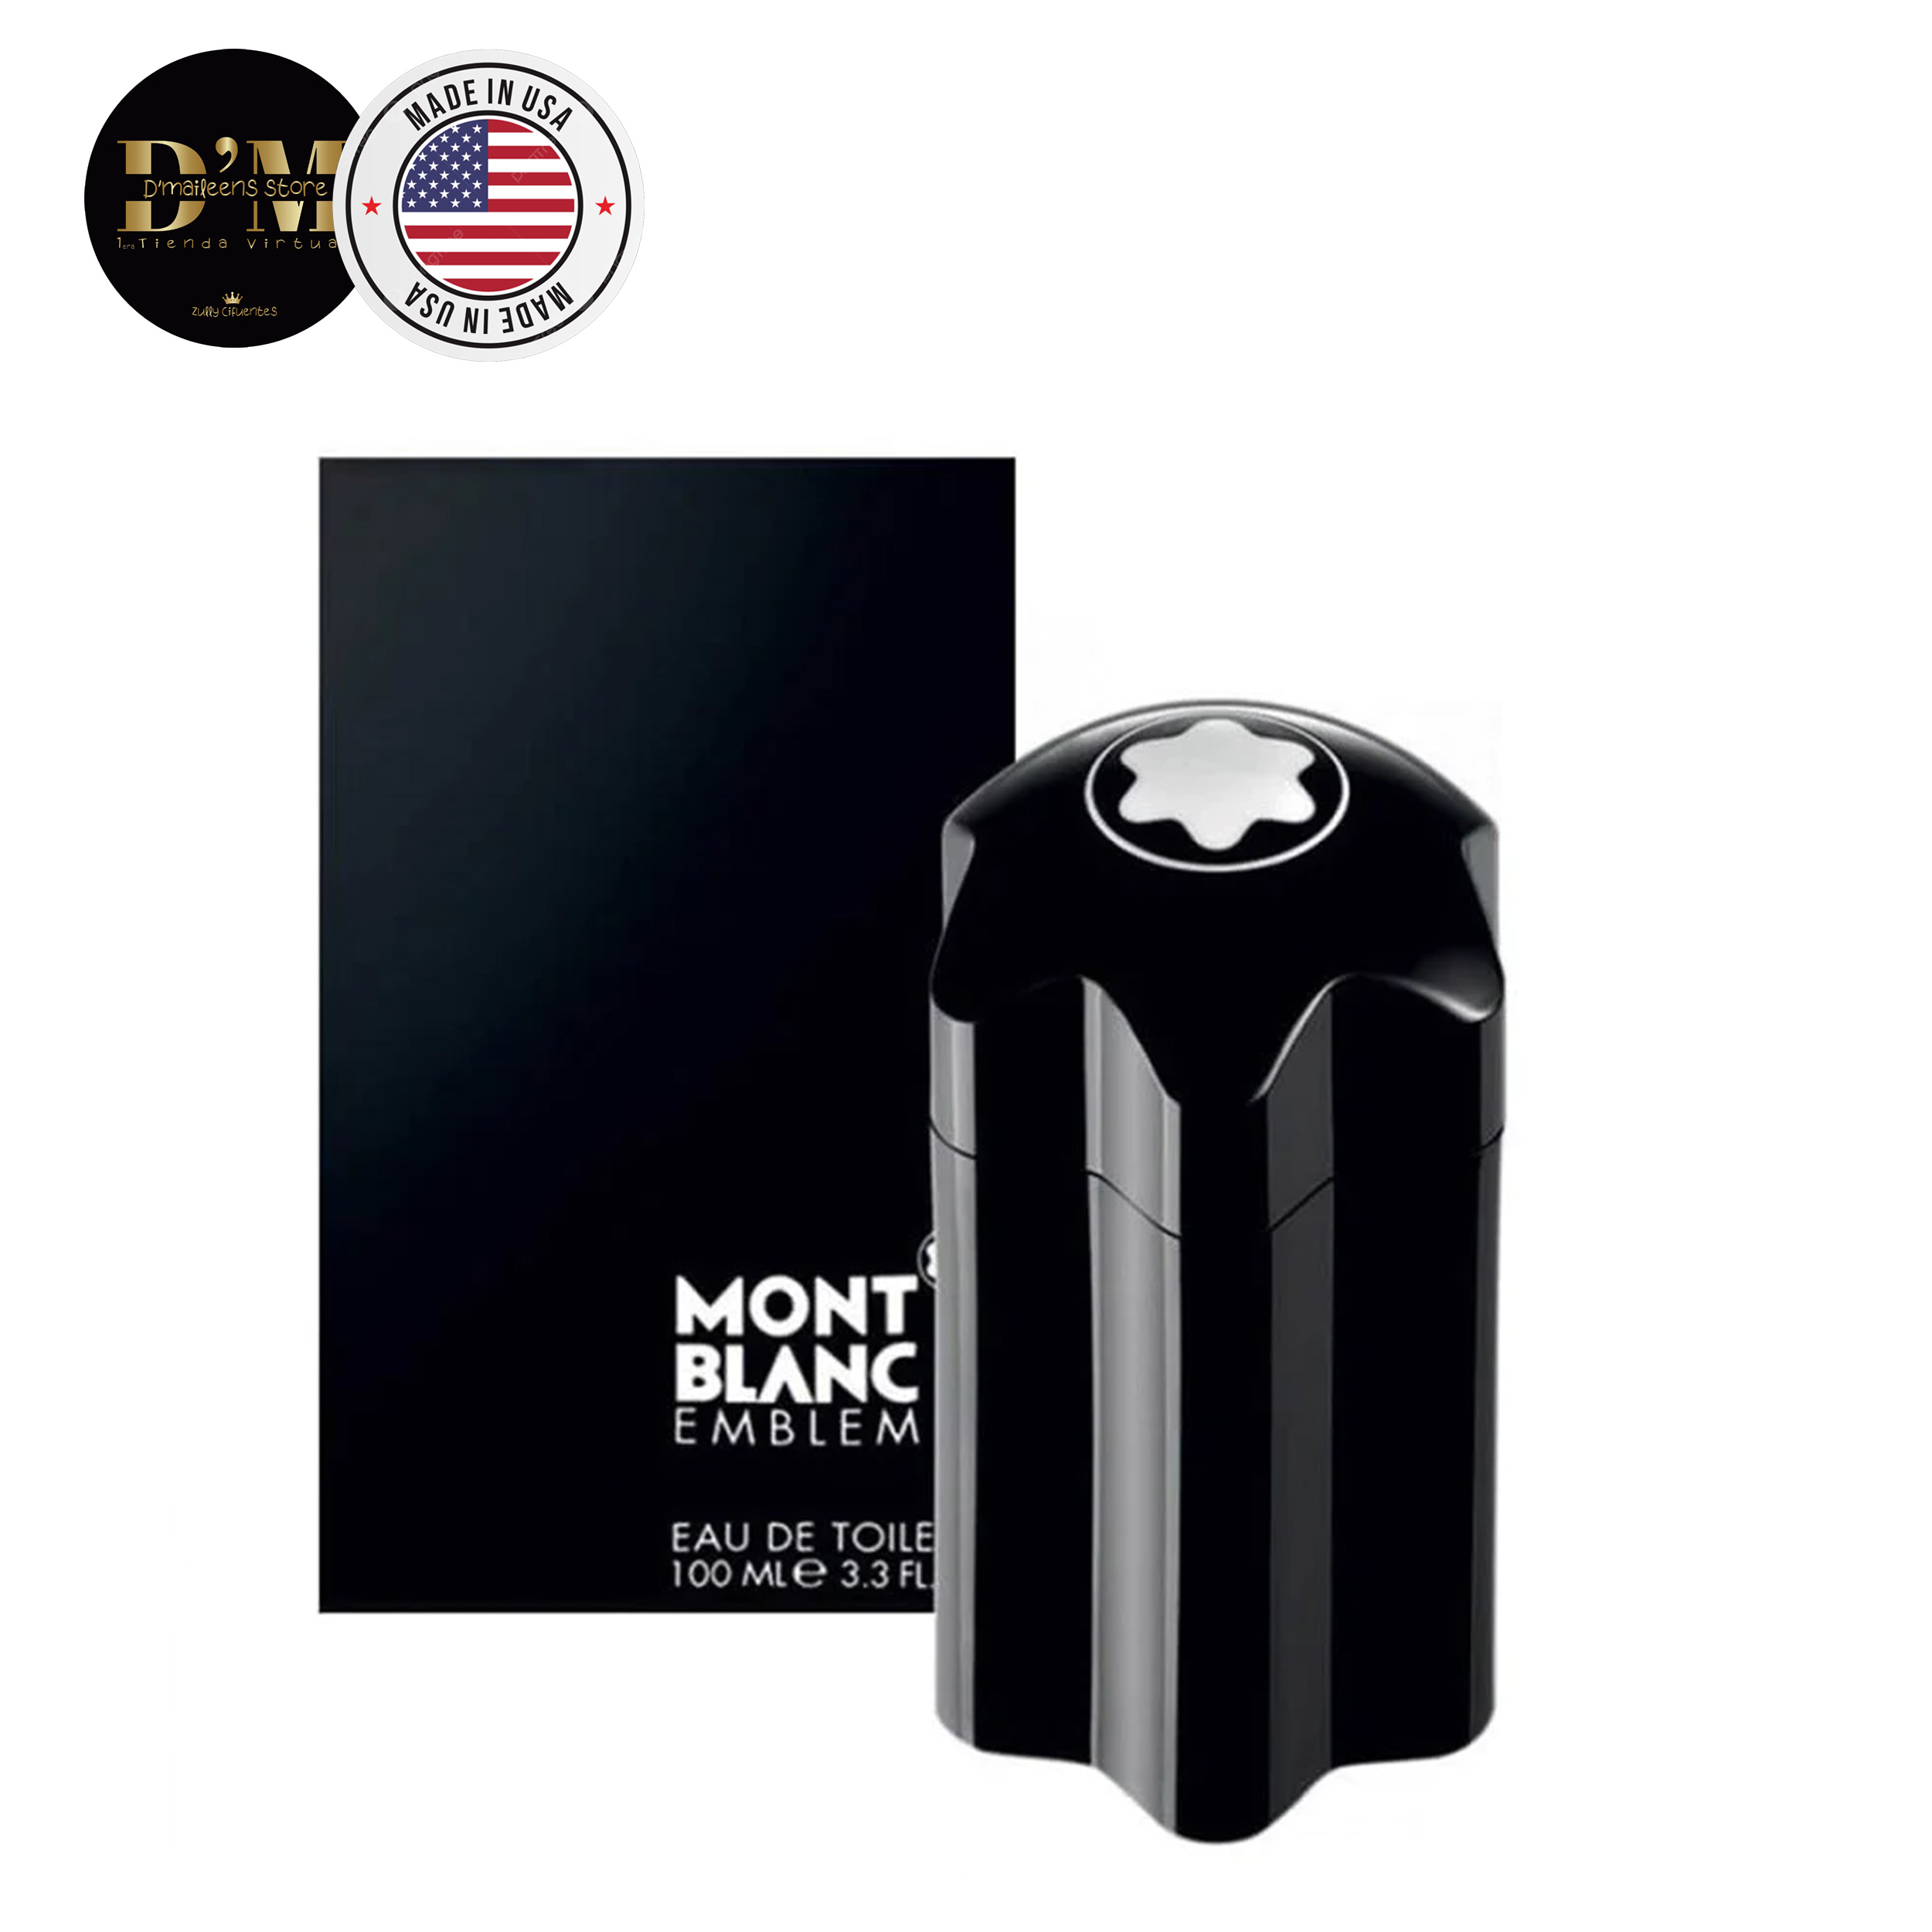  Perfume Emblem Montblanc   (Replica Con Fragancia Importada)- Hombre